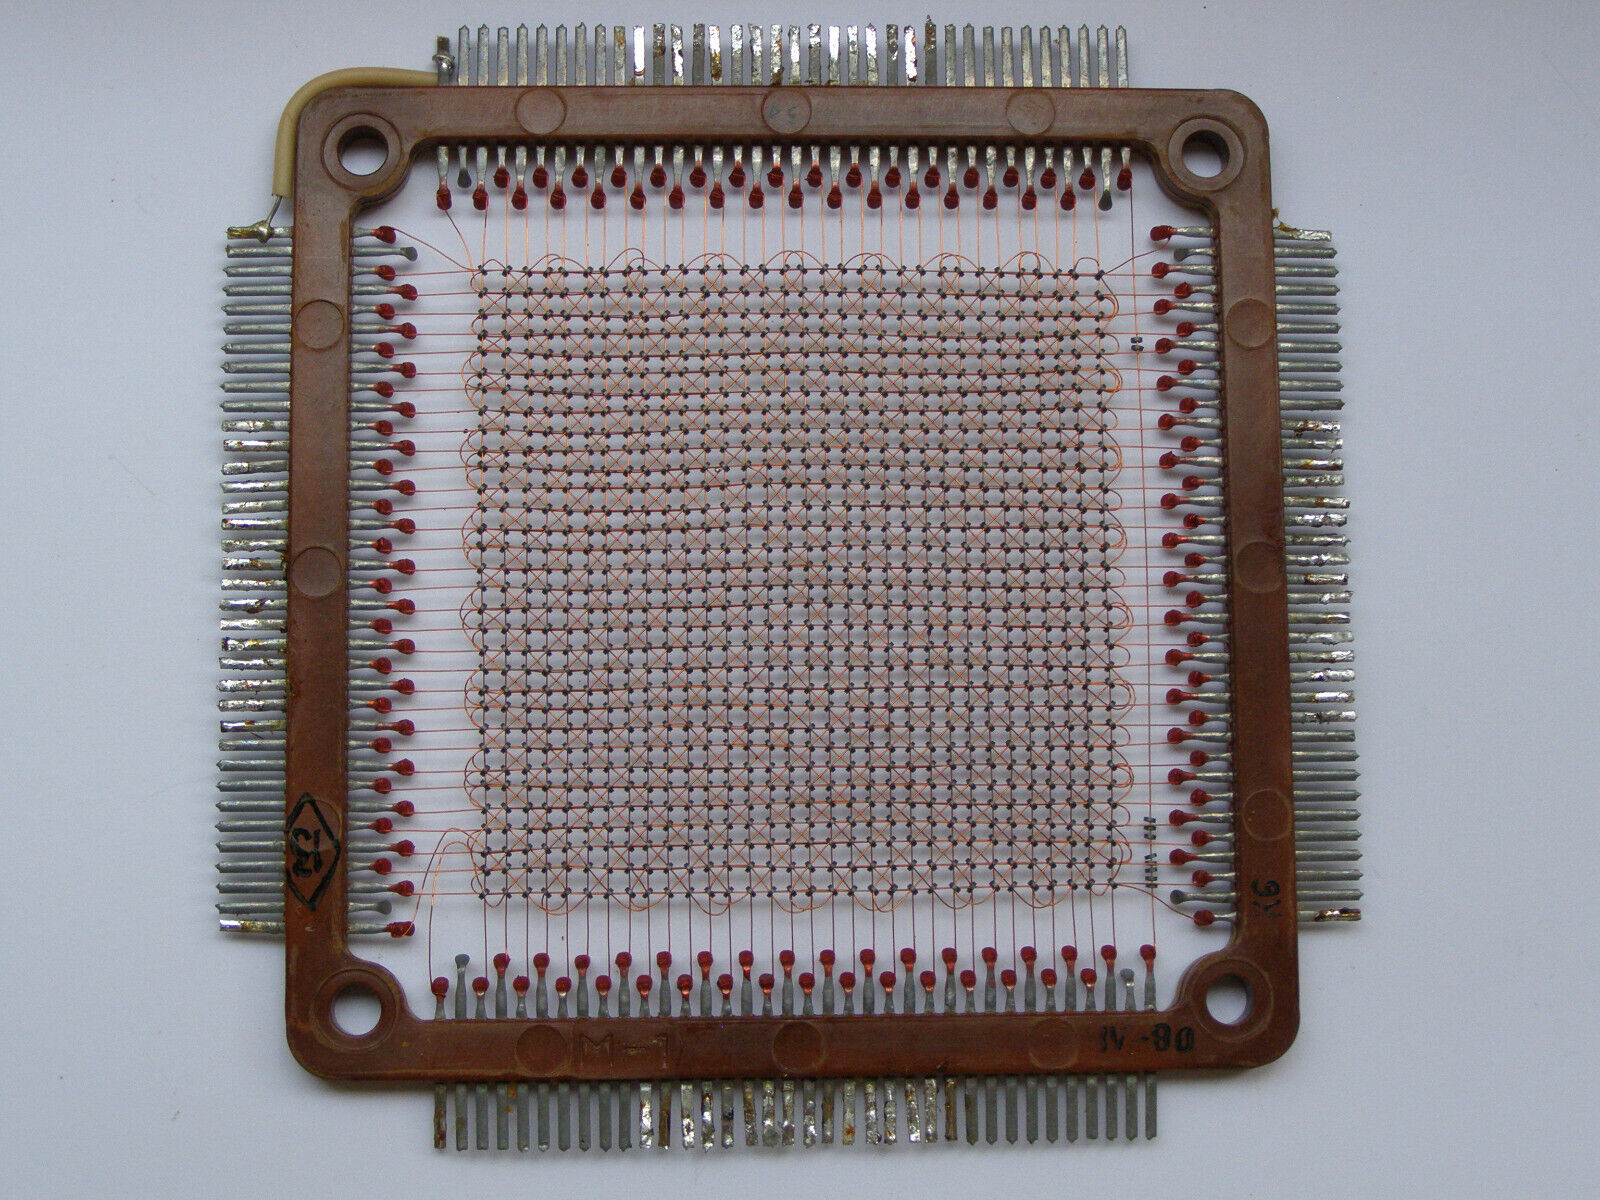 USSR Soviet RAM Magnetic Ferrite Core Memory M-1 Plate 128 byte 1980 SKU: 102